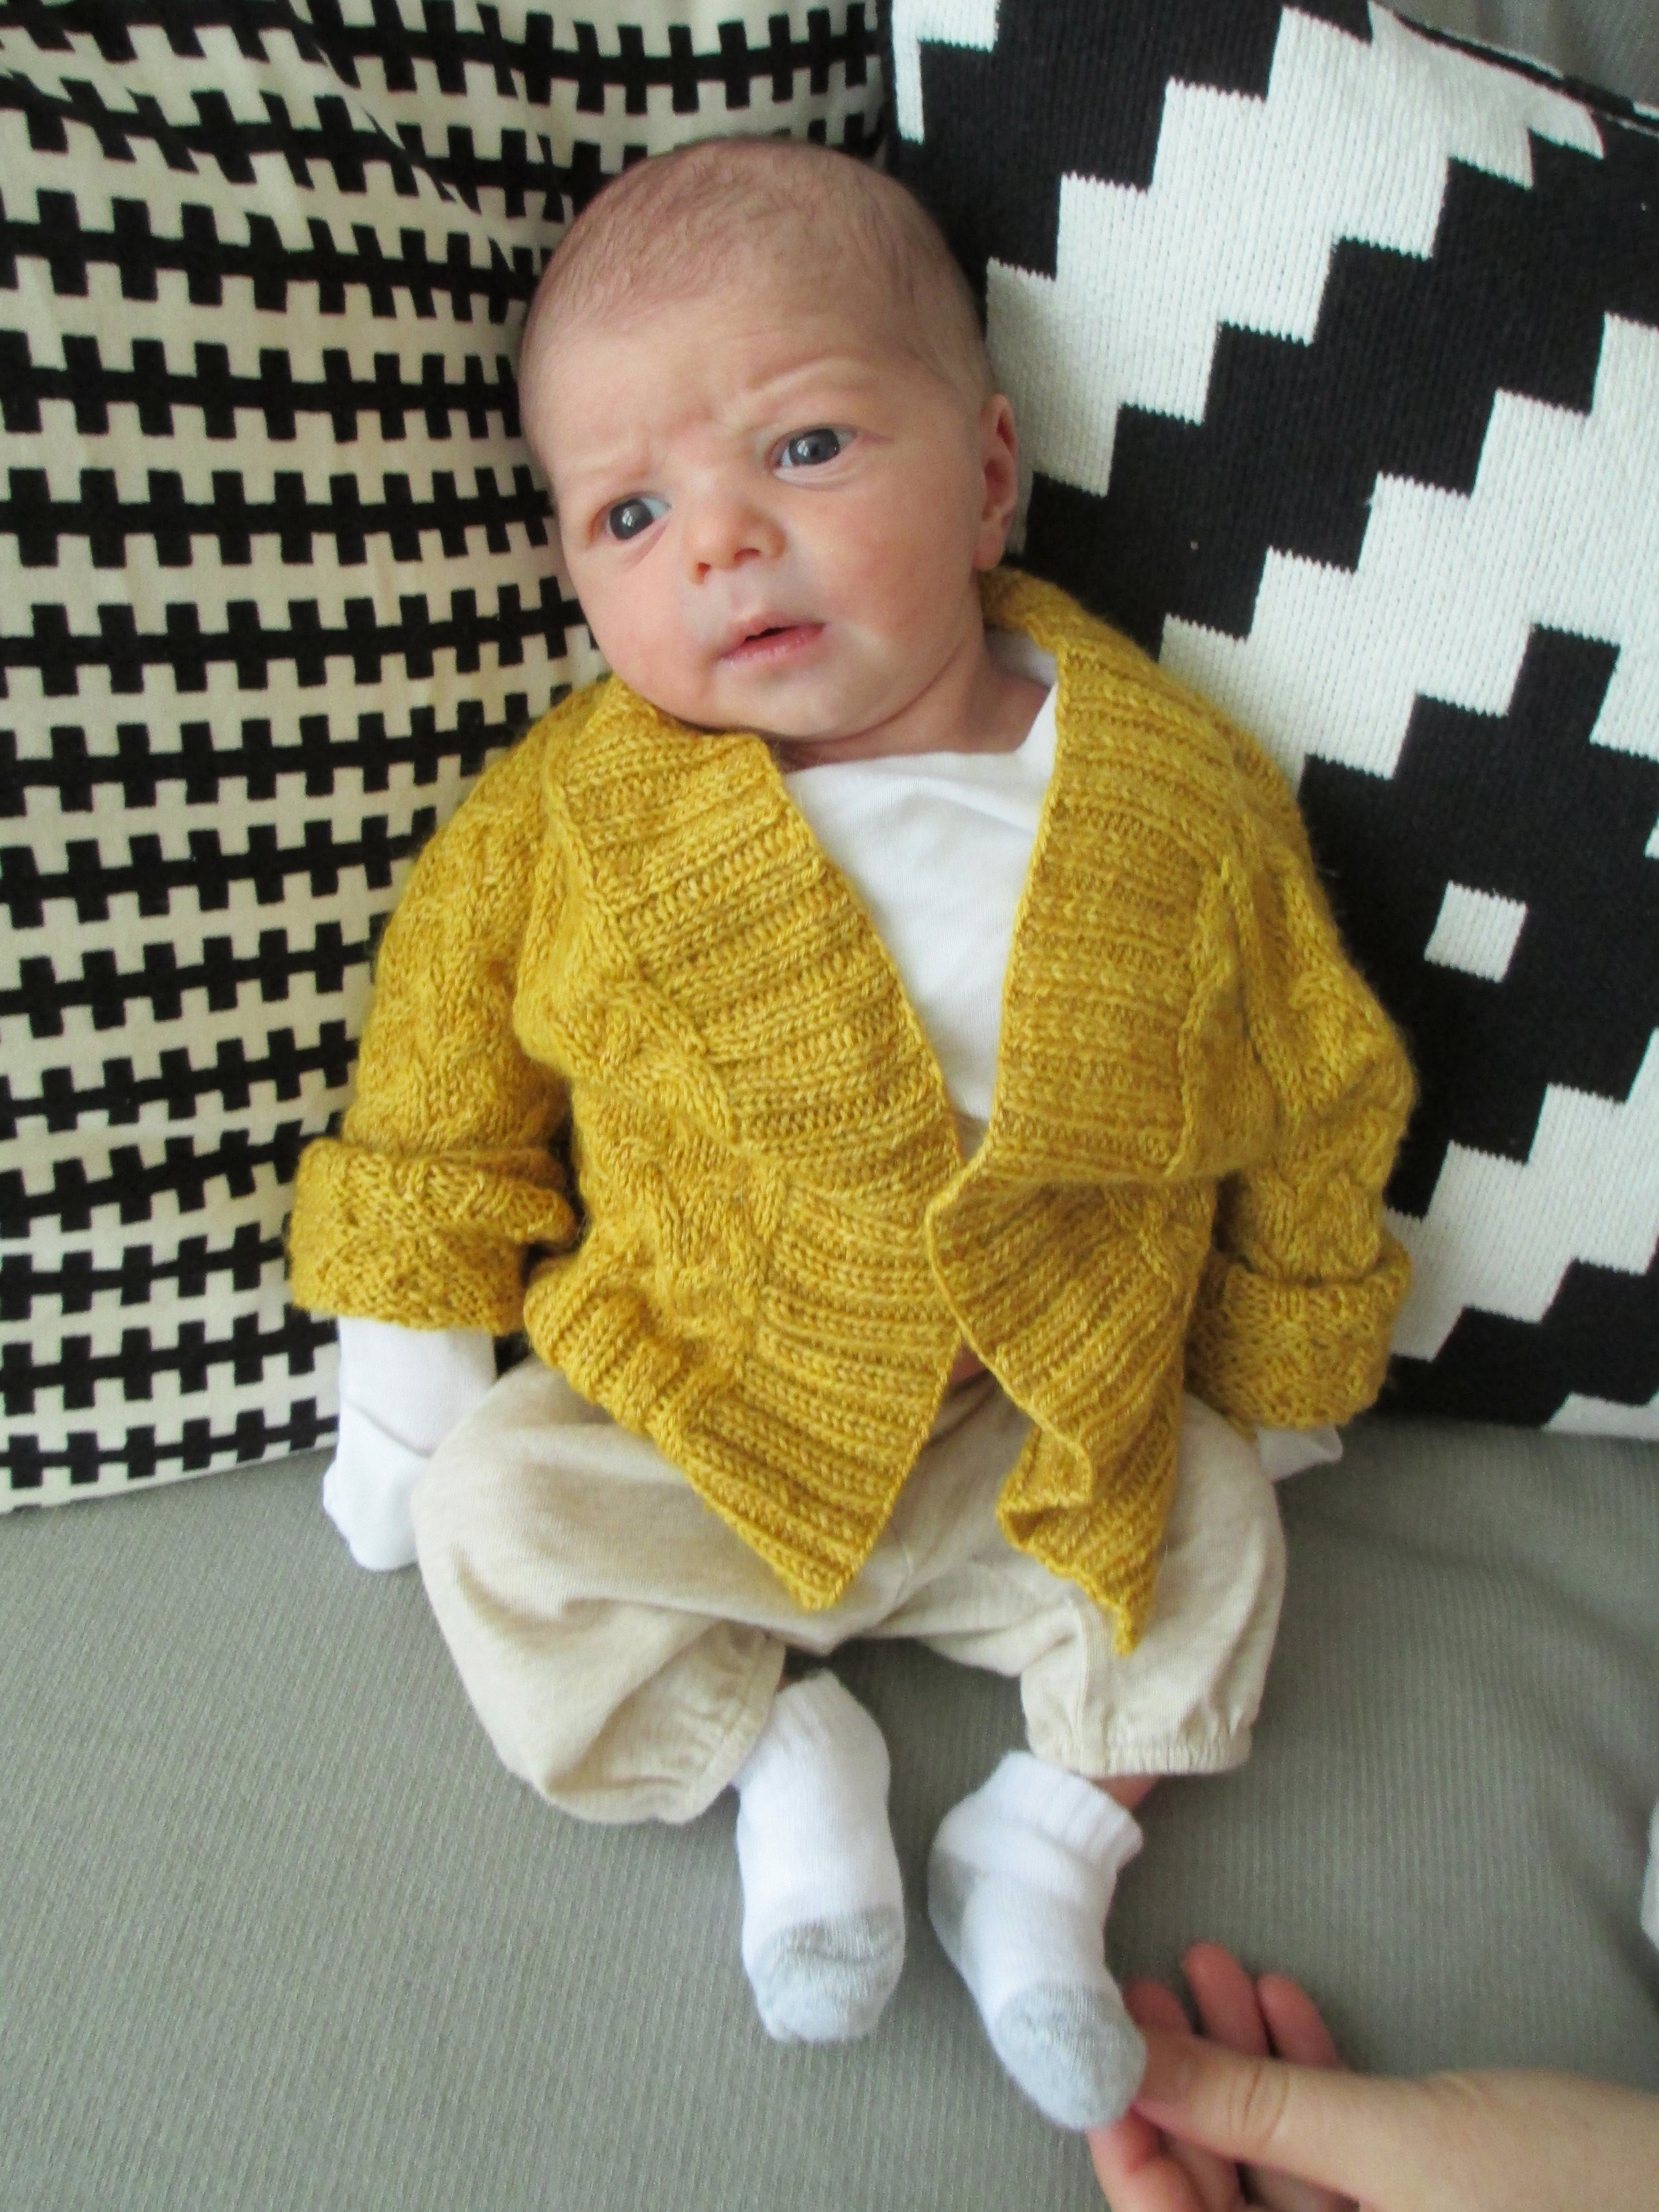 Marissa-Huber-Teeny-Baby-Knitting-Rocky-Mountain-Sweater